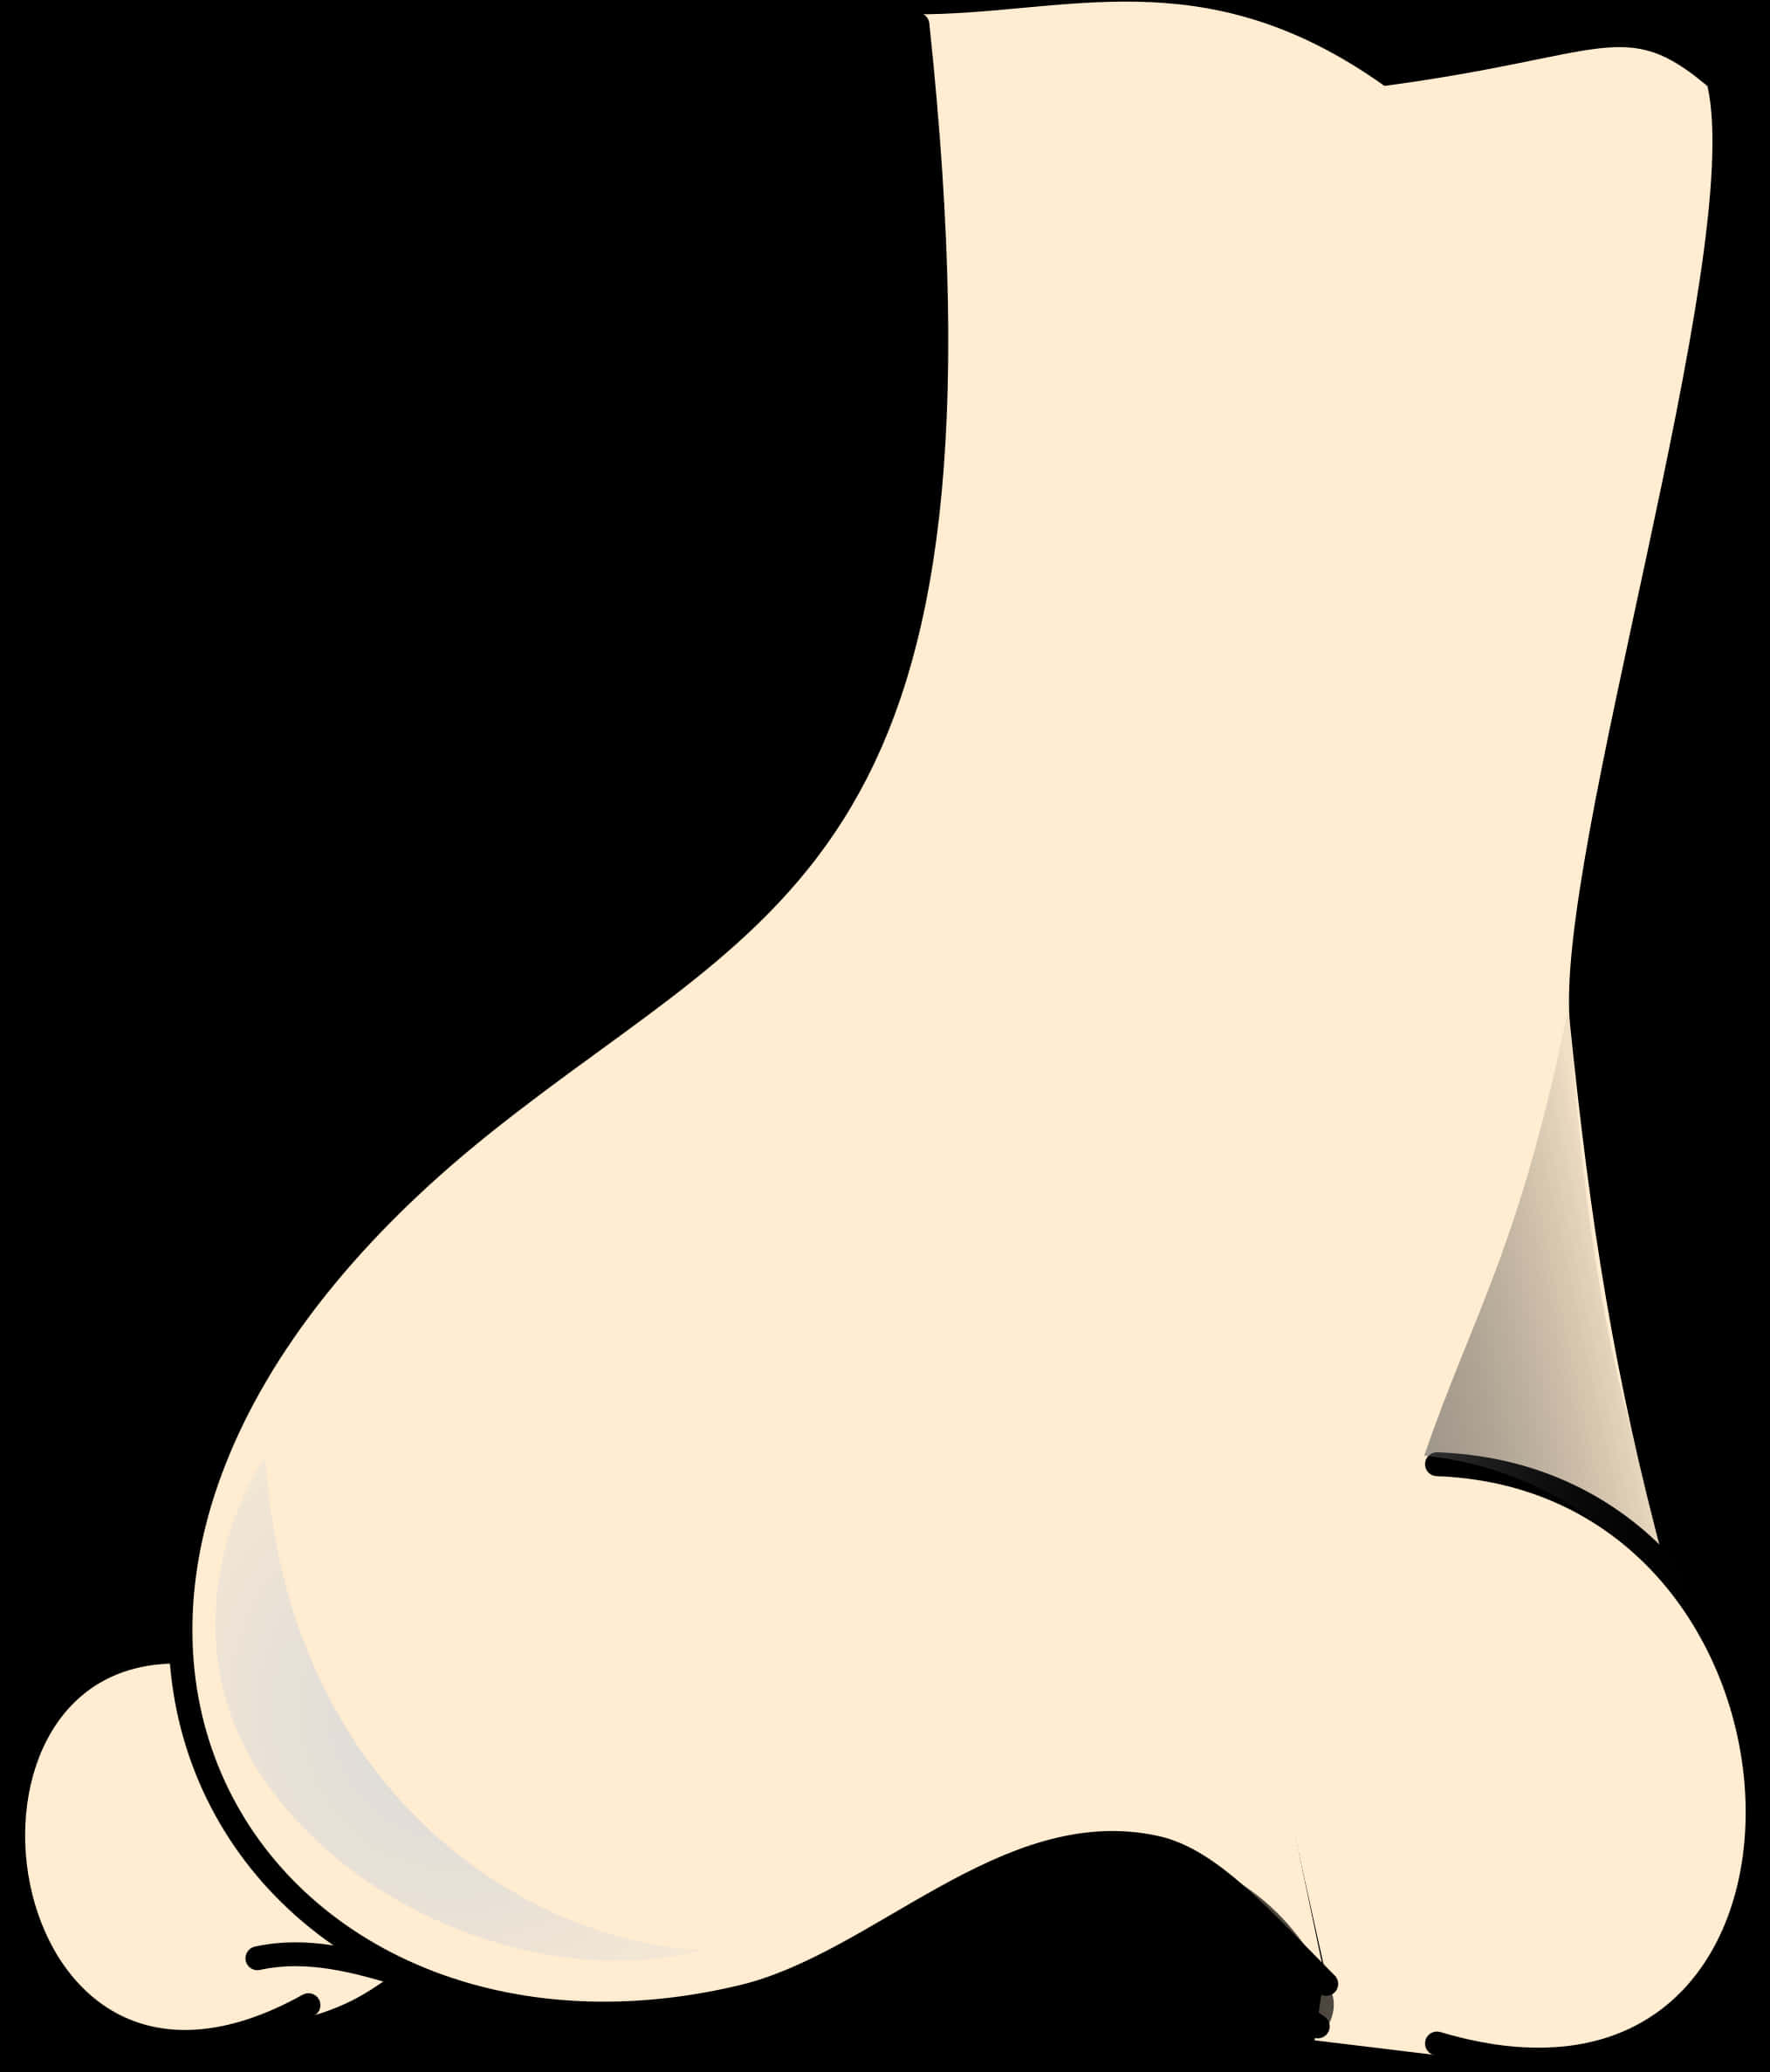 Cartoon Nose Profile Illustration PNG image